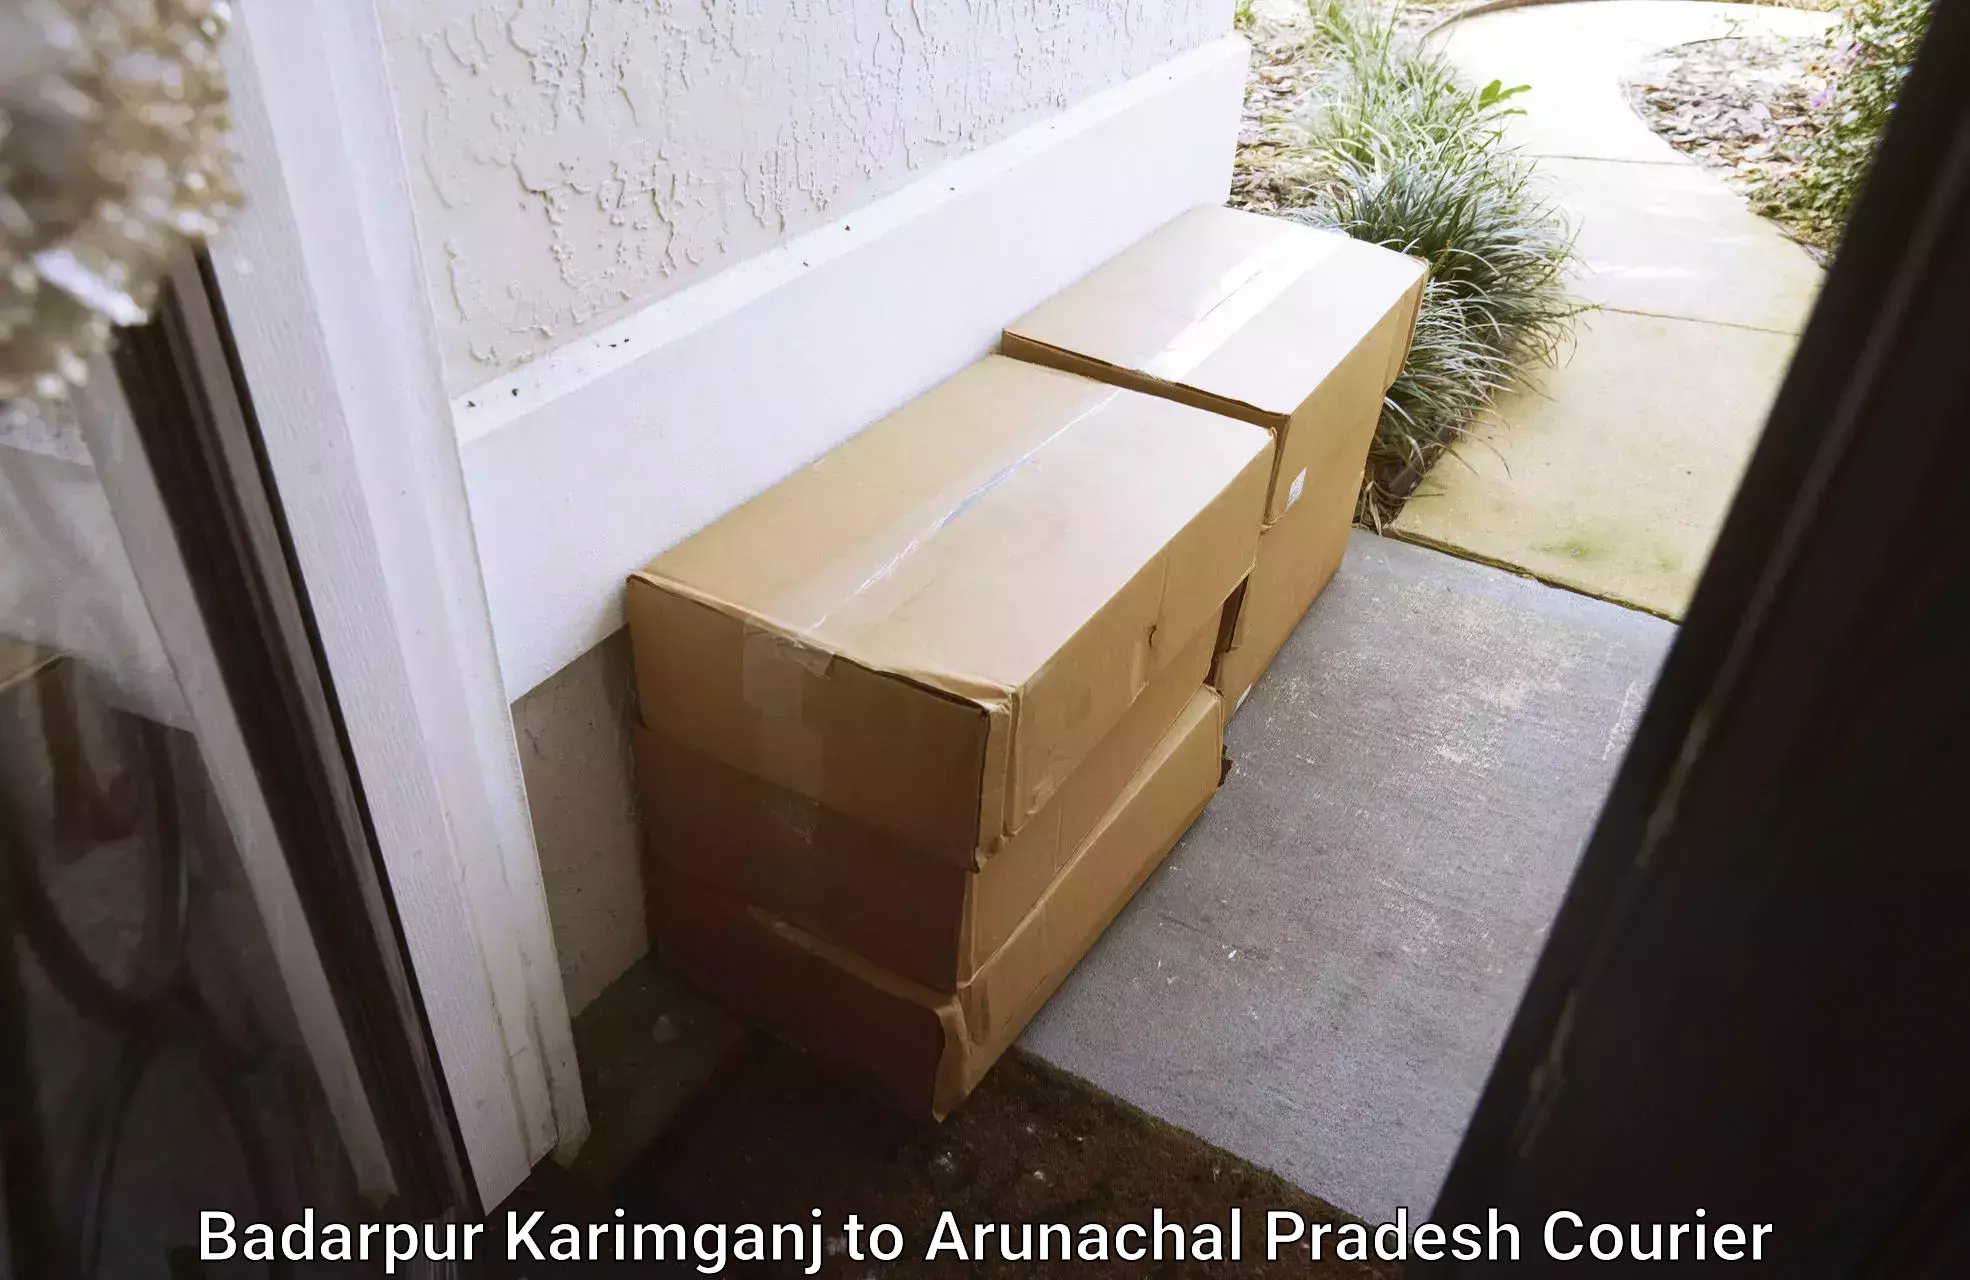 On-call courier service Badarpur Karimganj to Lower Subansiri